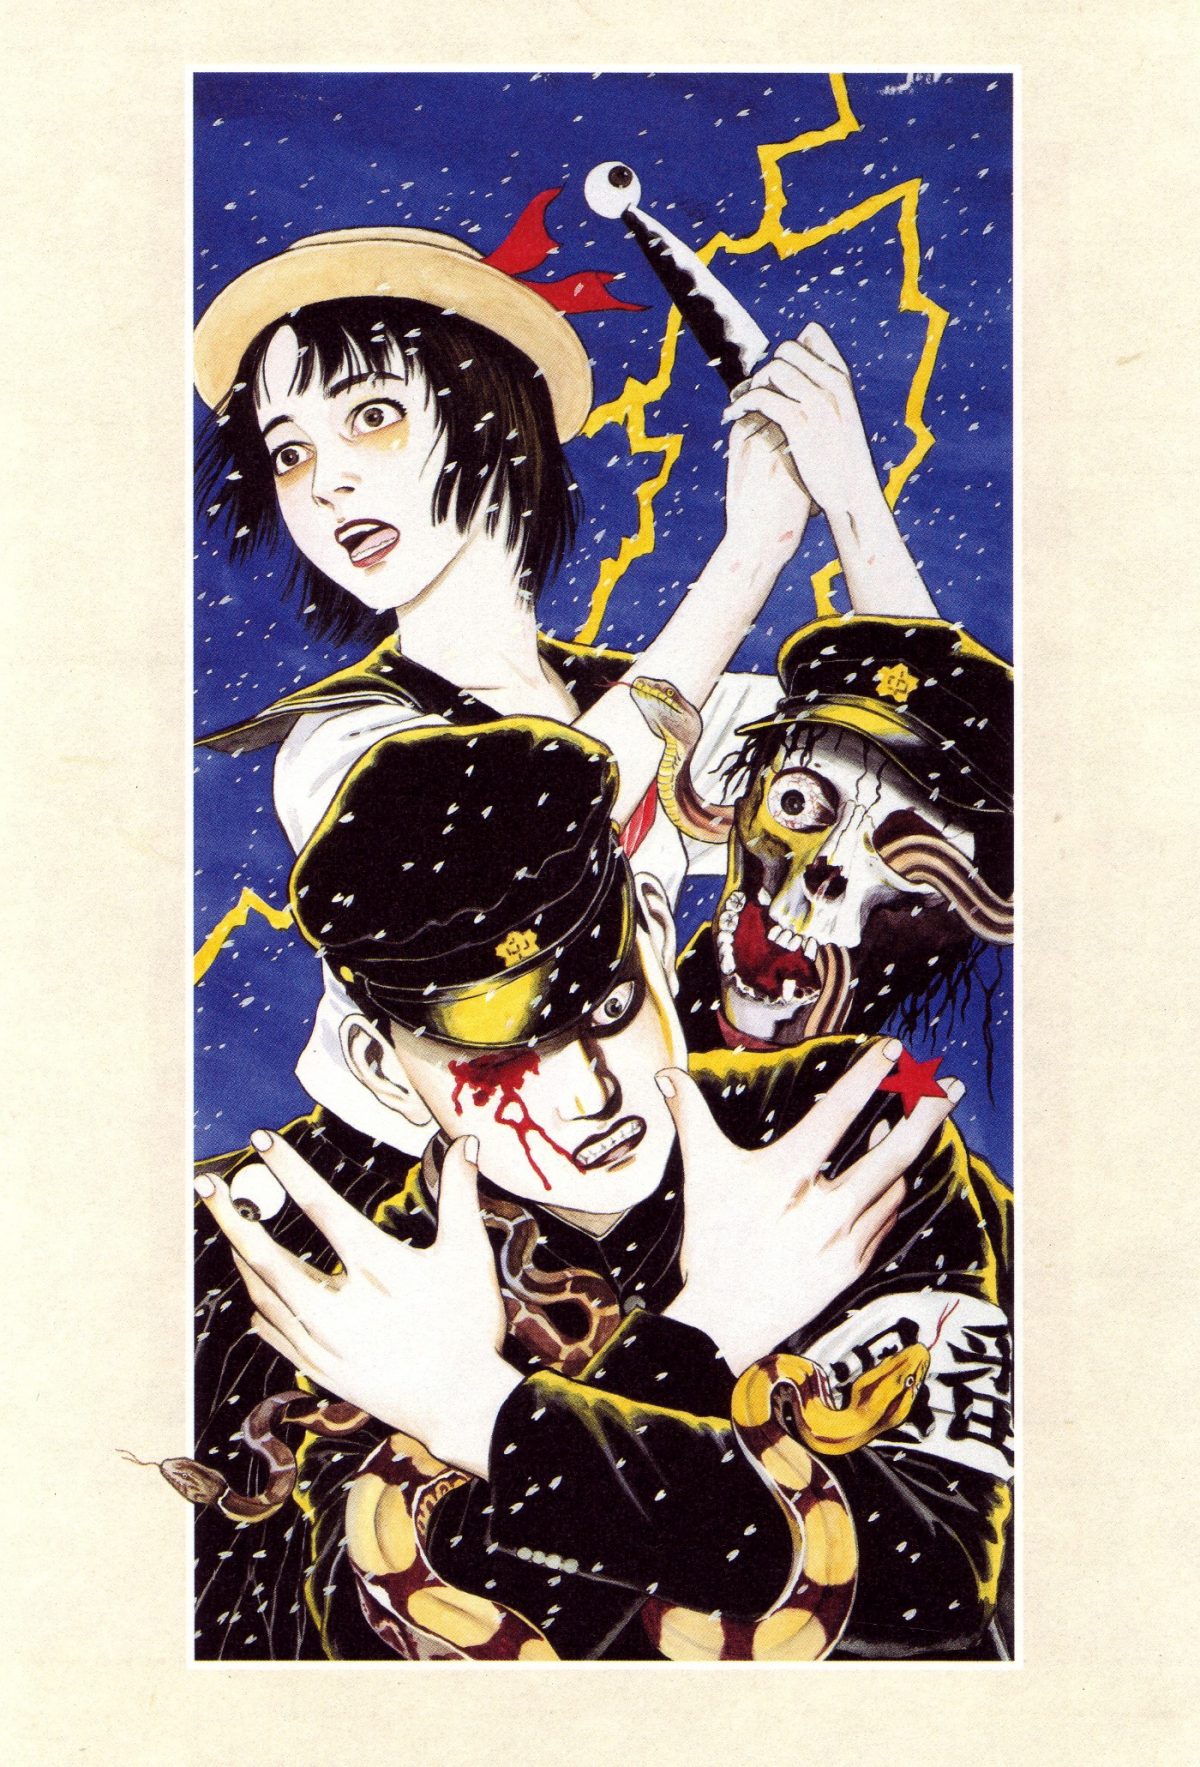 Suehiro Maruo, manga, anime, art, illustration, comic books